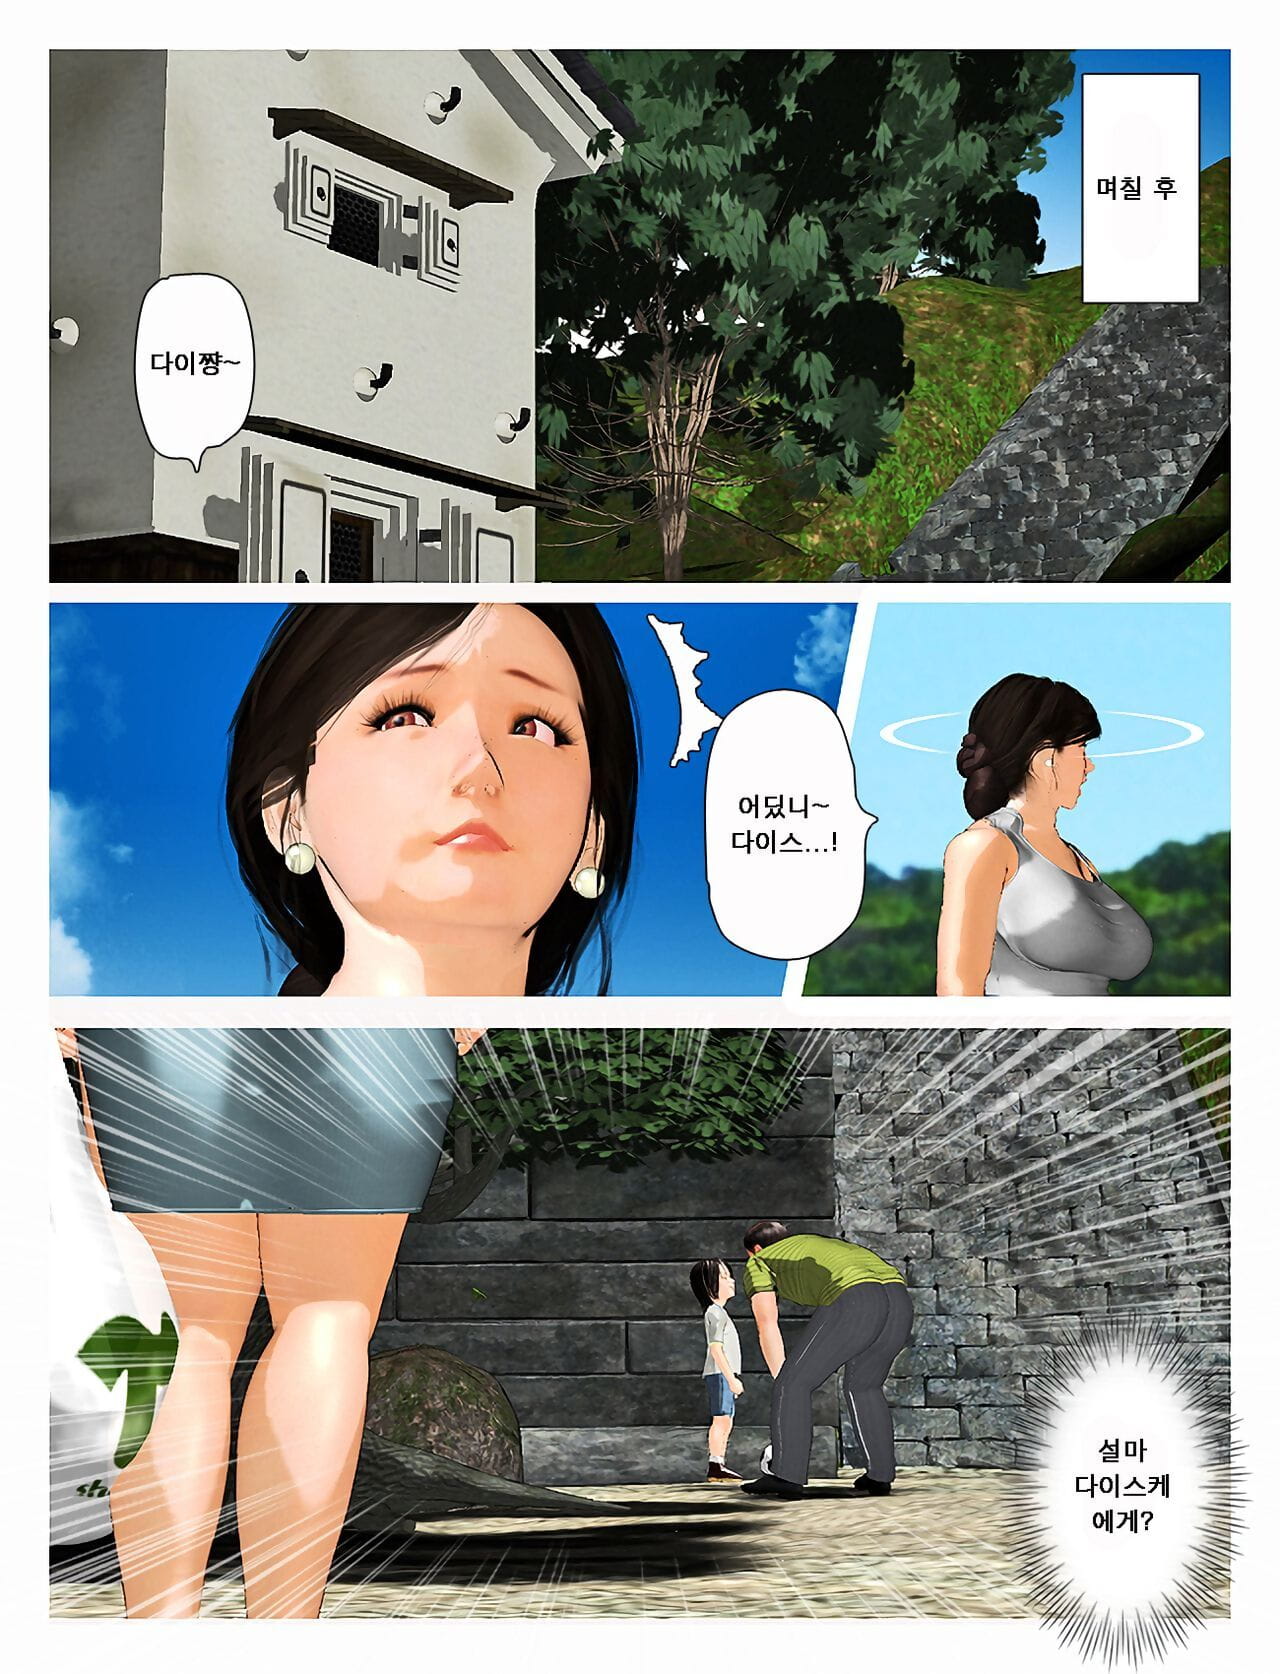 Kyou ไม่ misako ของเดือนมุฮัรร็อม 2019:2 오늘의 미사코씨 2019:2 page 1